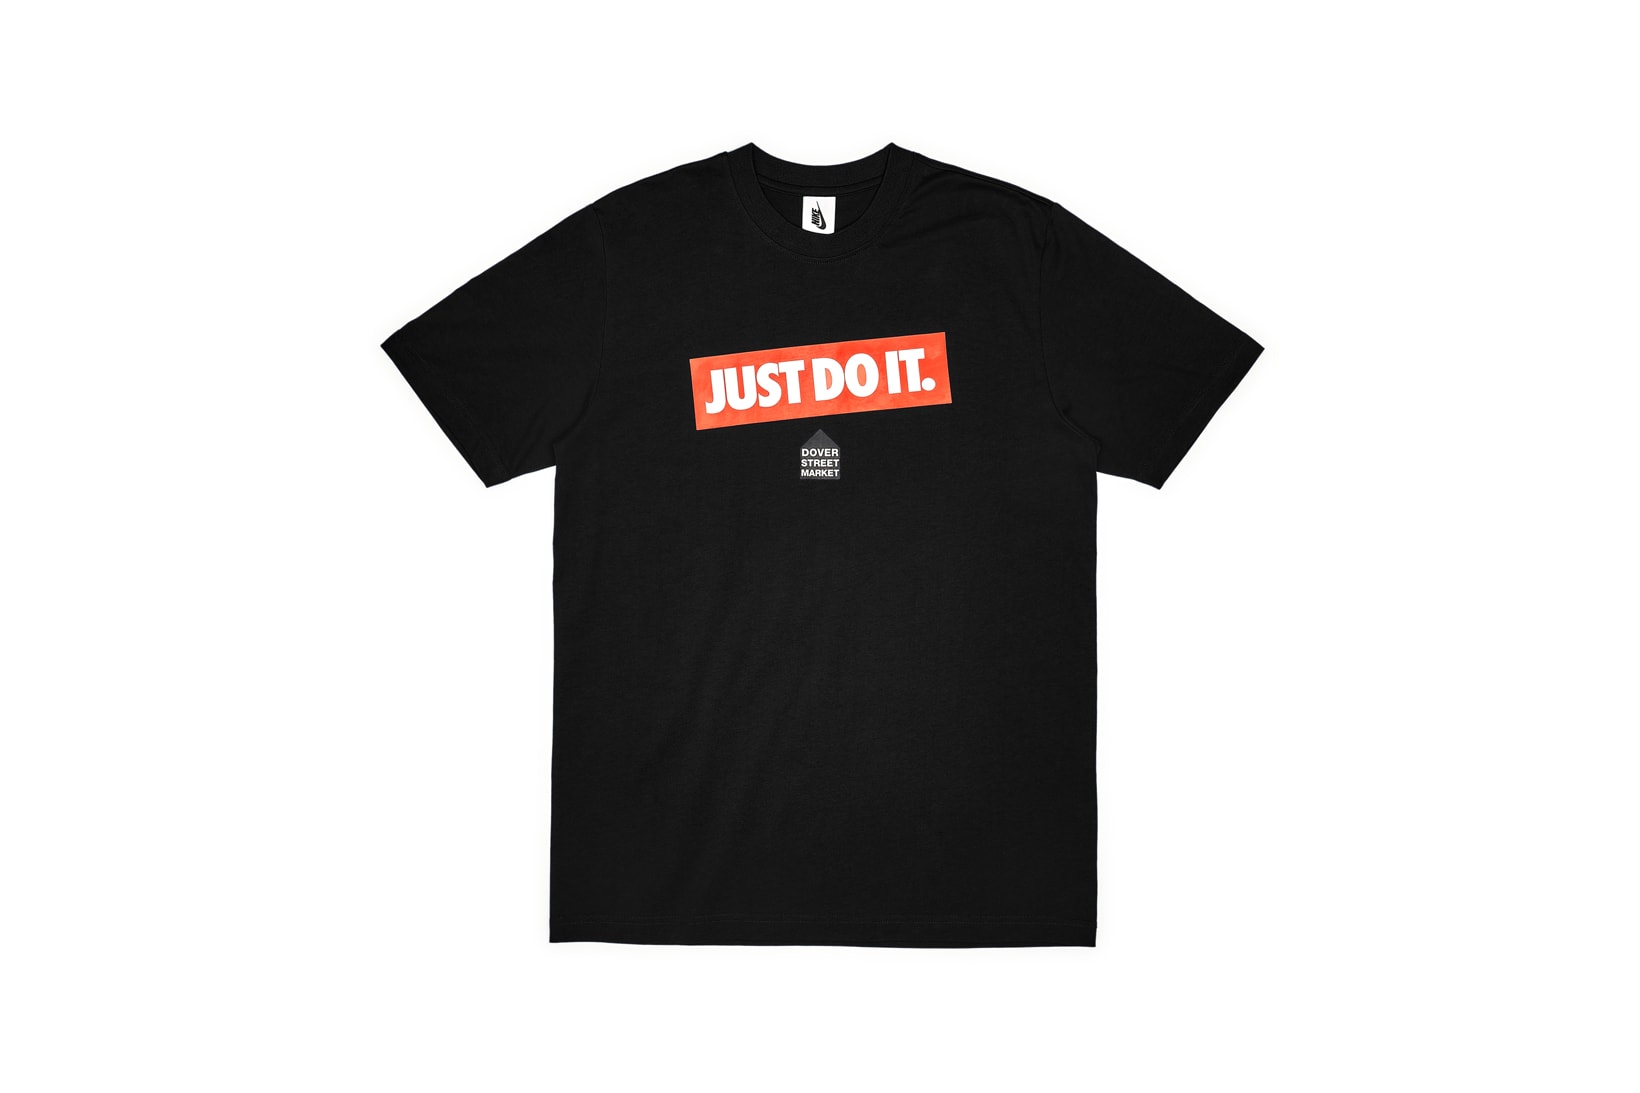 Nike x Dover Street Market Just Do It T-shirt Black